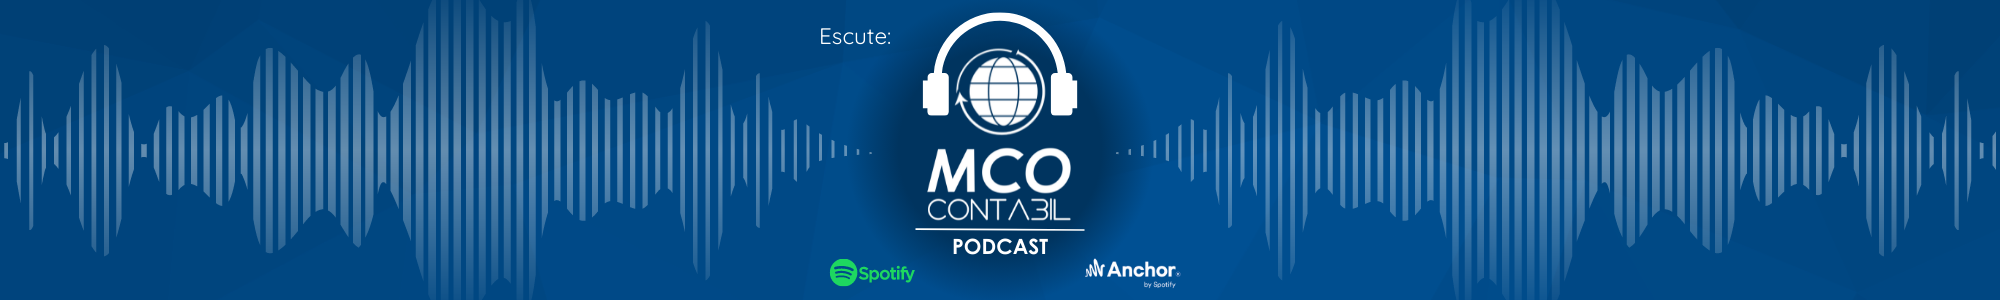 Escute o podcast da MCO Contábil